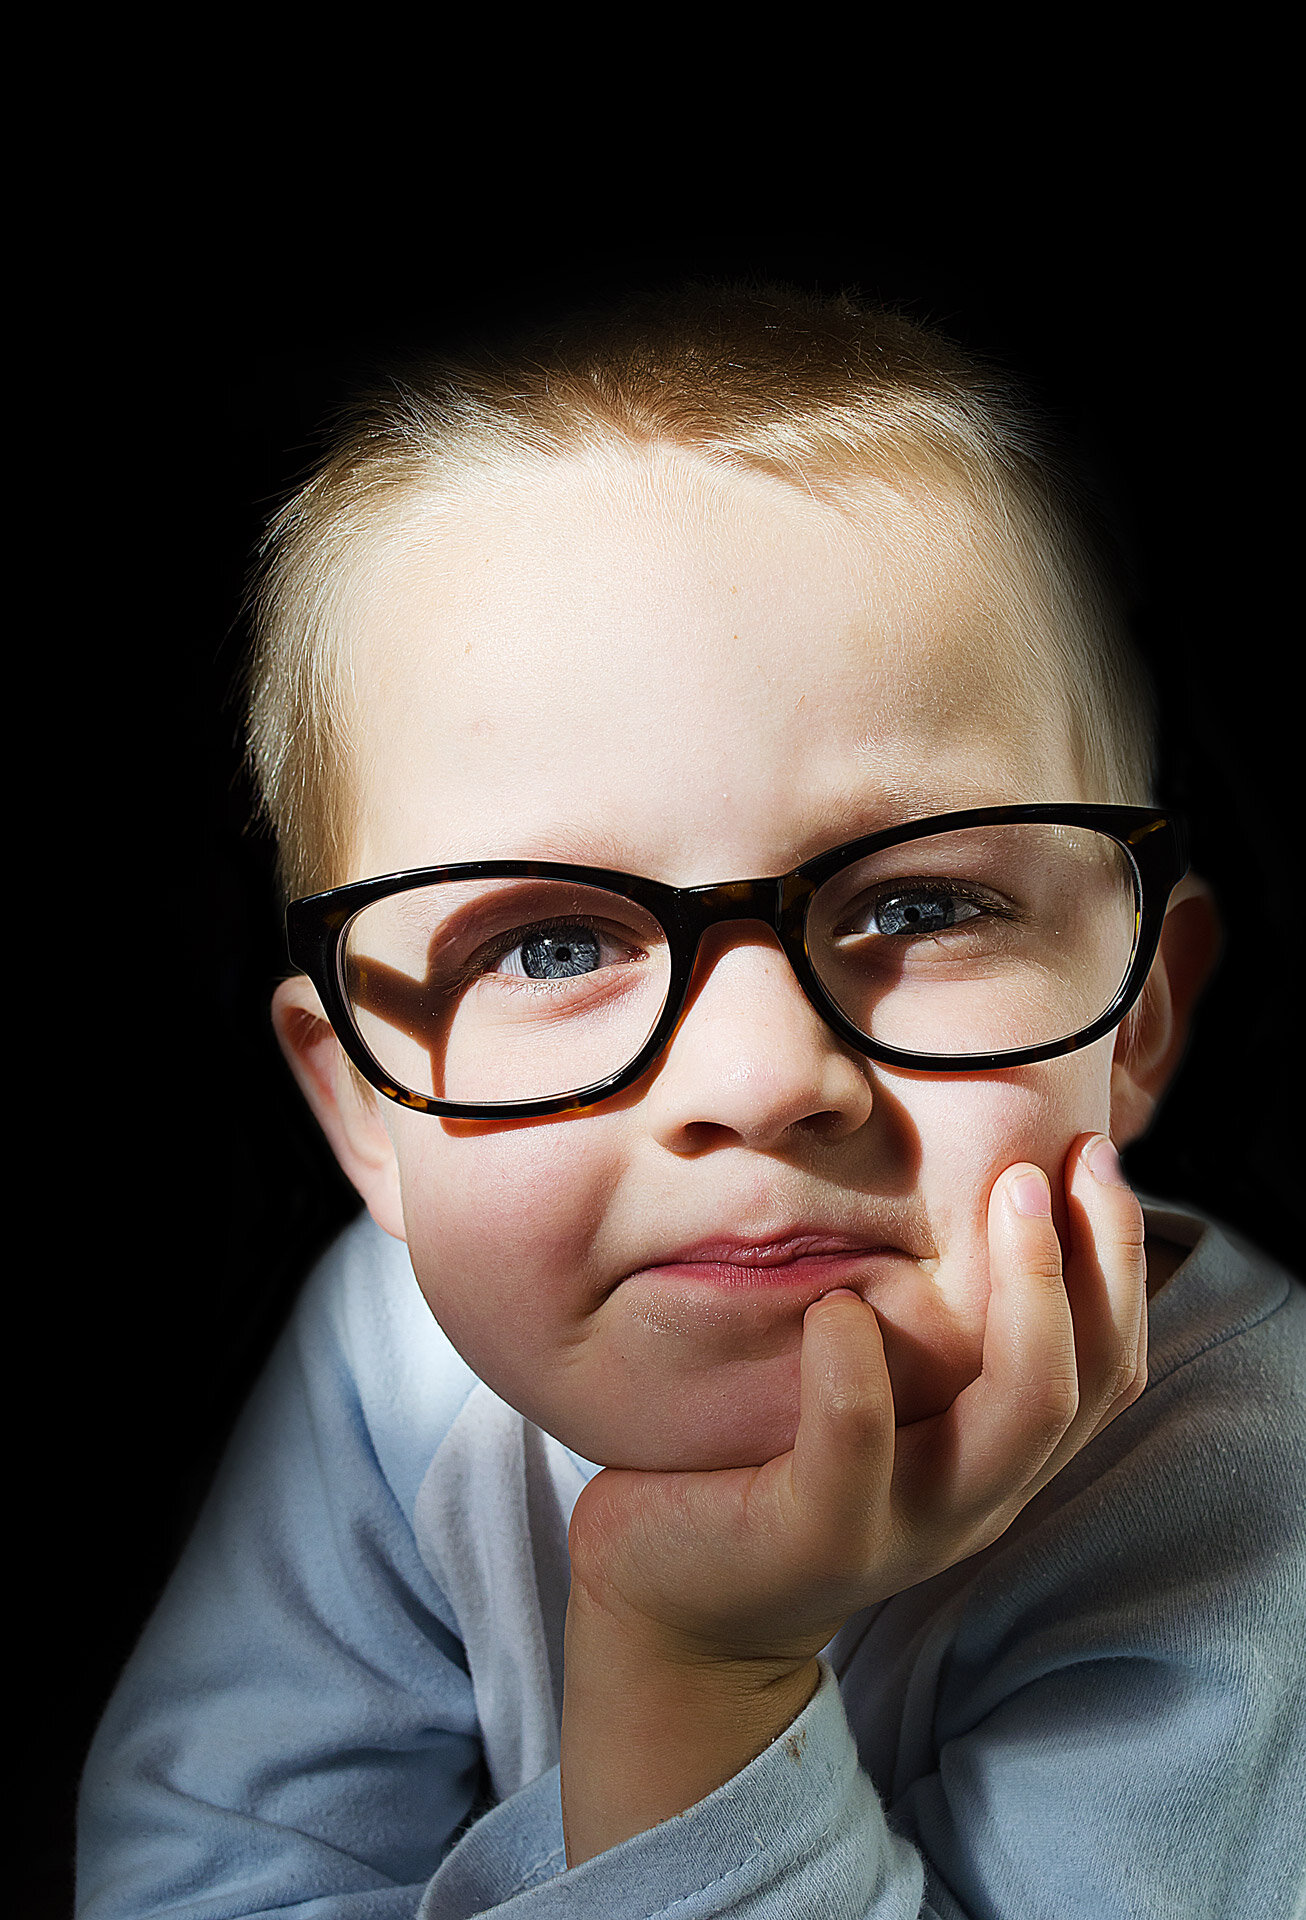 child-and-optical-glasses.jpg